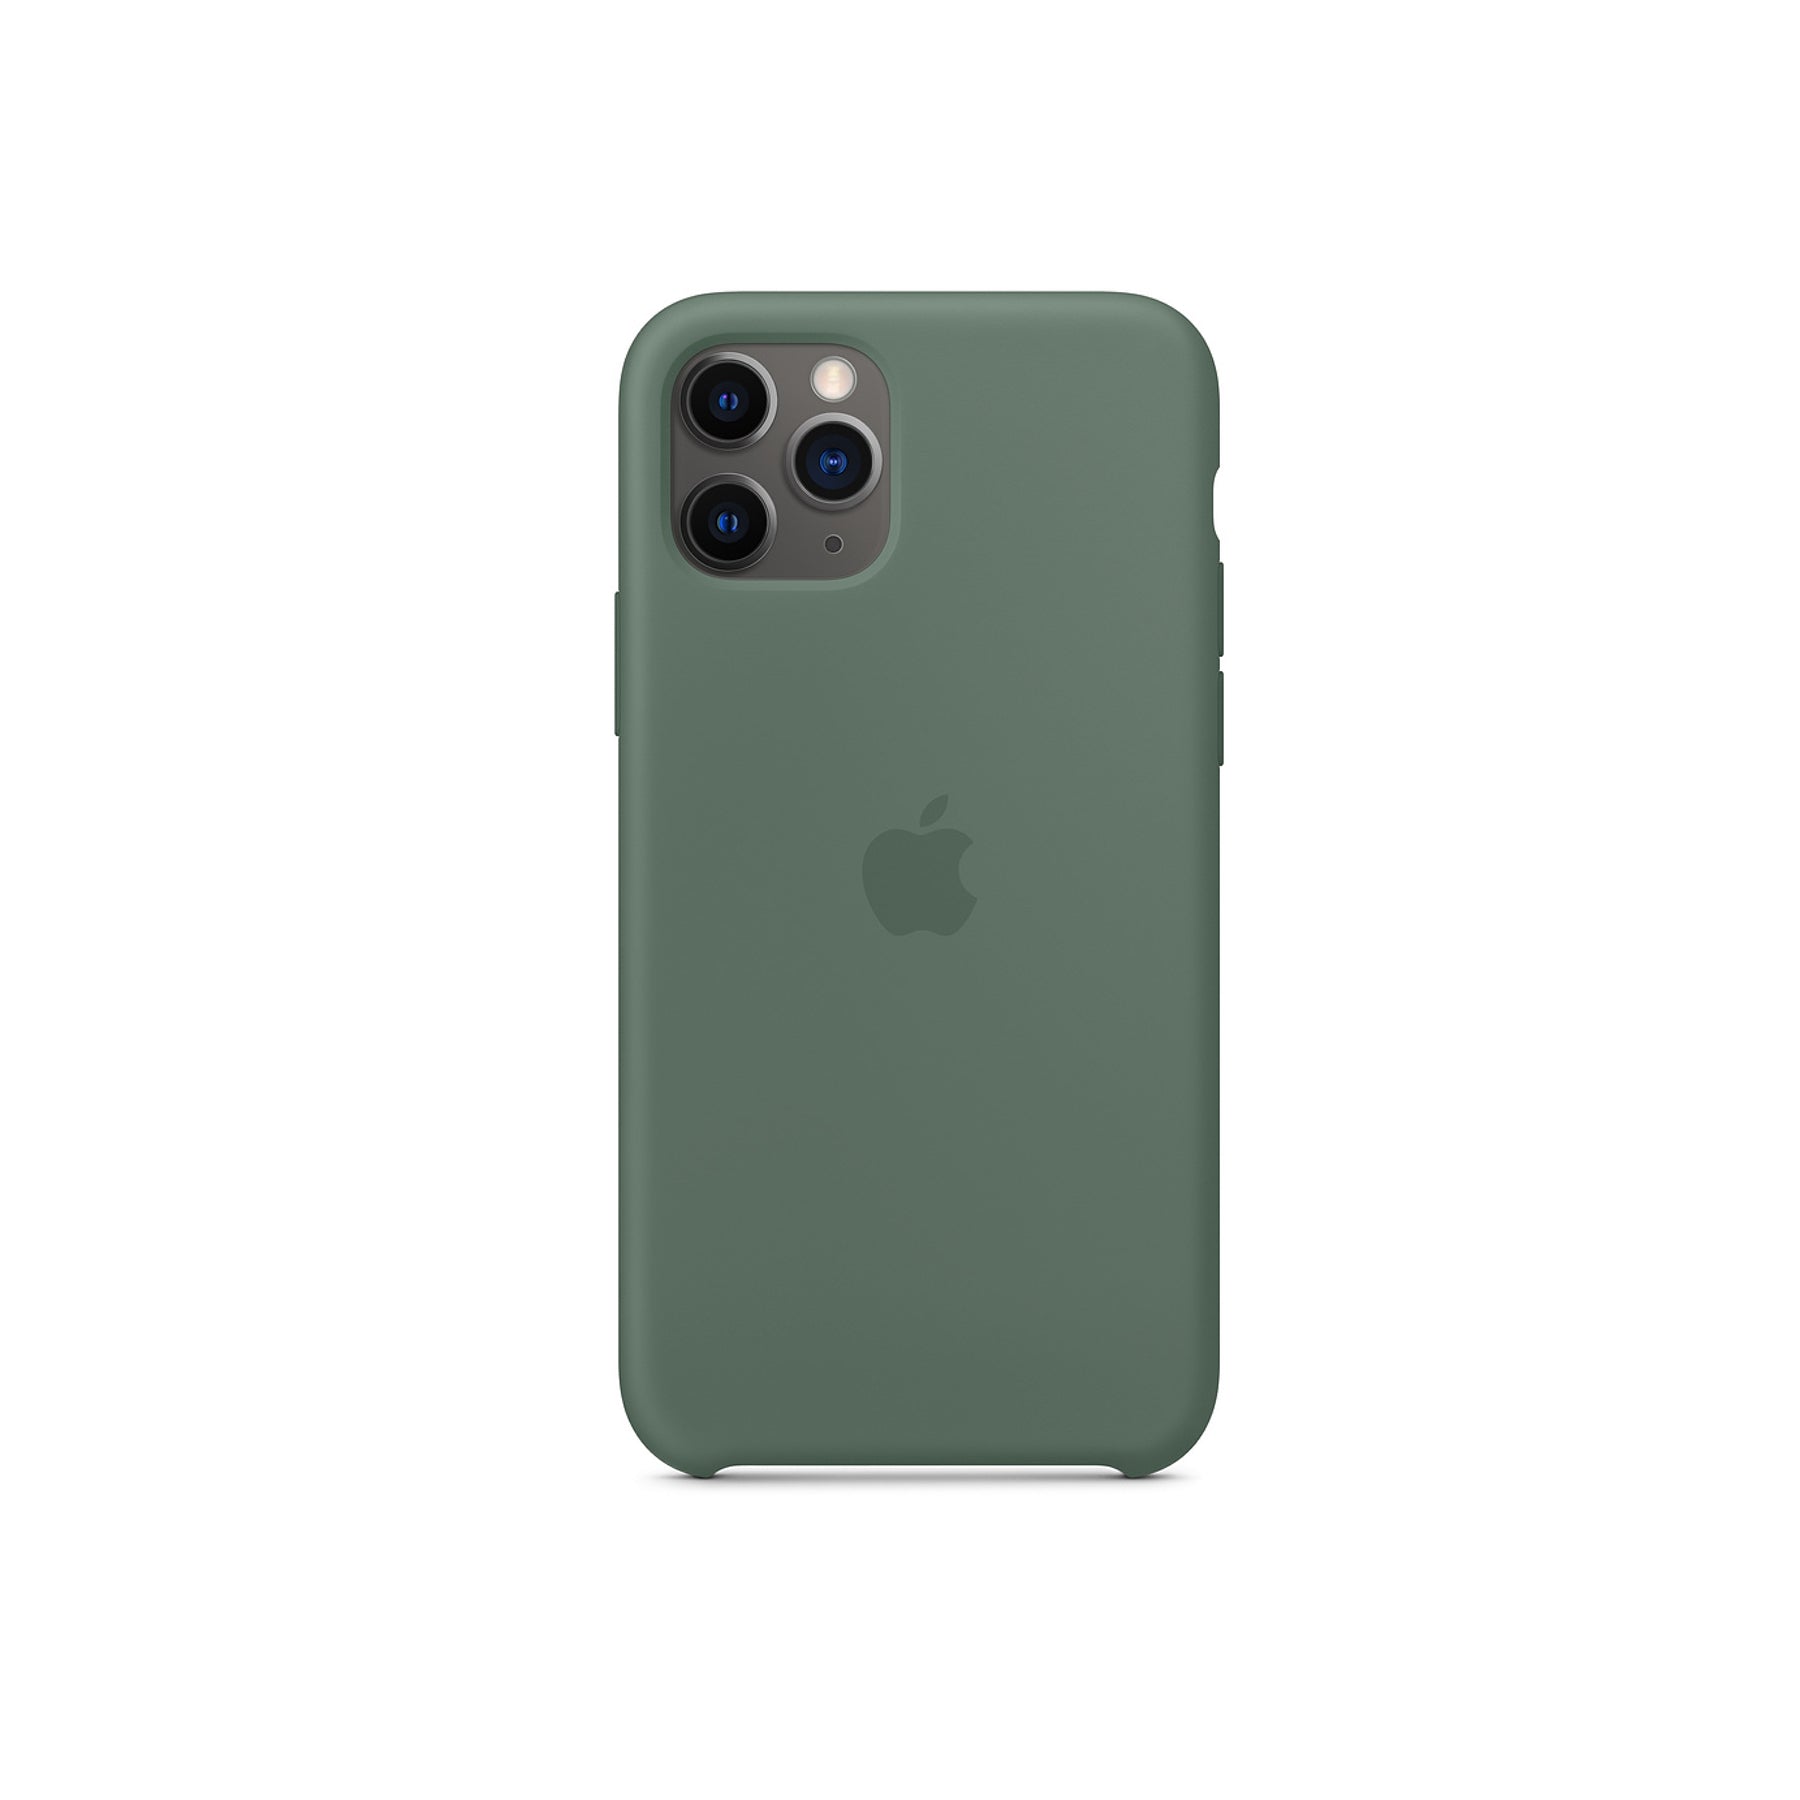 Estuche APPLE Original Silicon   Verde  (Pine Green) IPHONE 11 PRO (5.8)